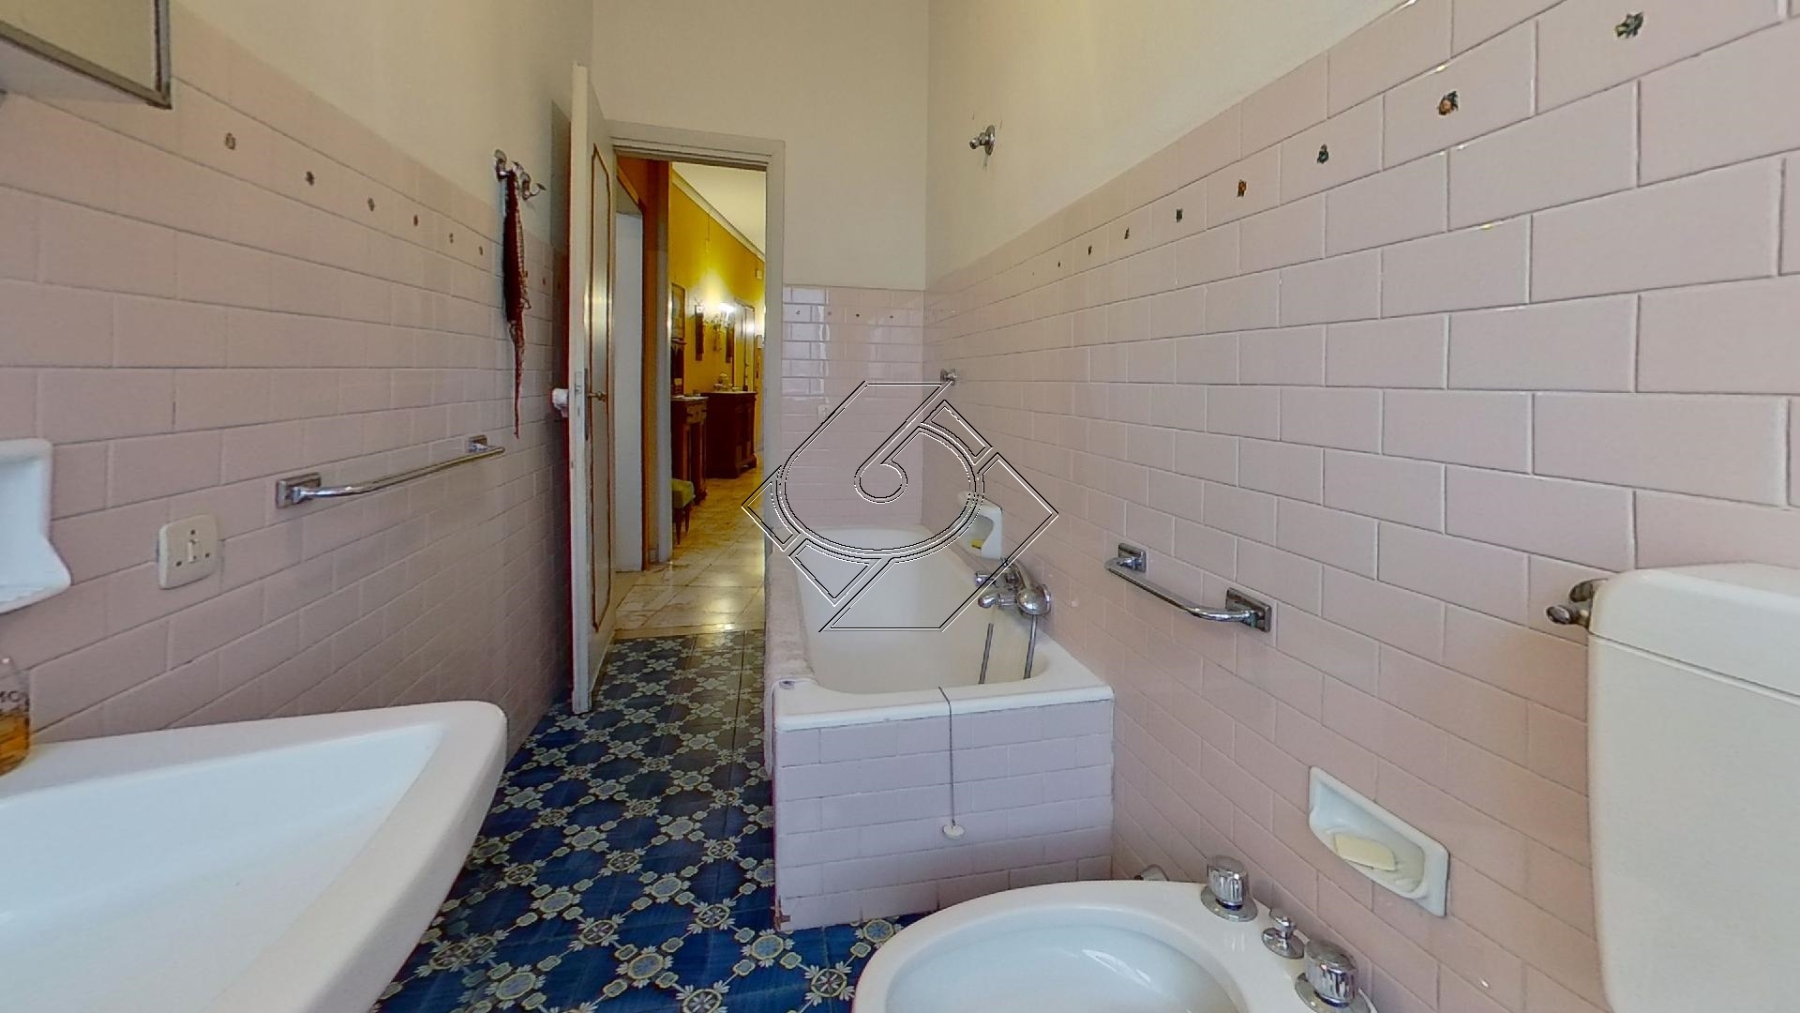 5A-Via-Francesco-Carletti-Bathroom1